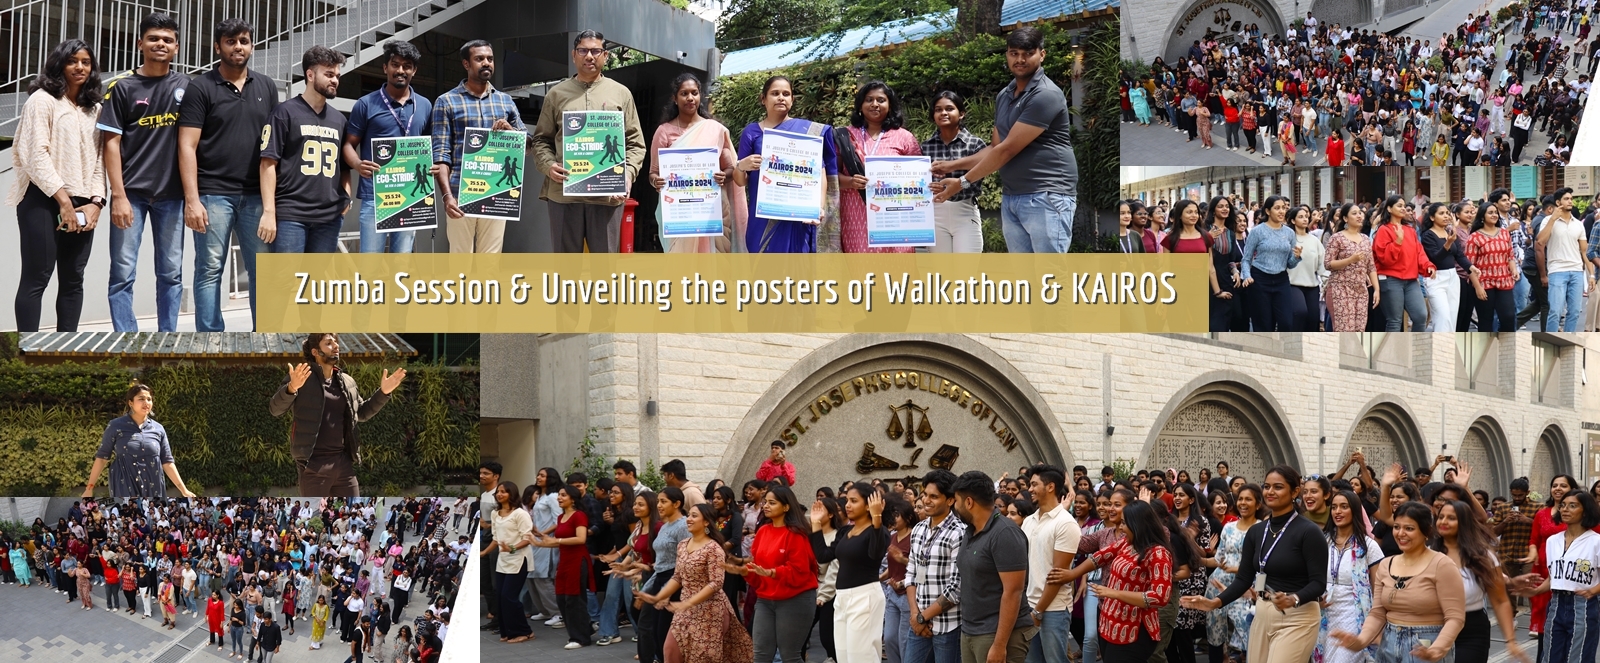 Zumba Session & Unveiling the posters of Walkathon & KAIROS